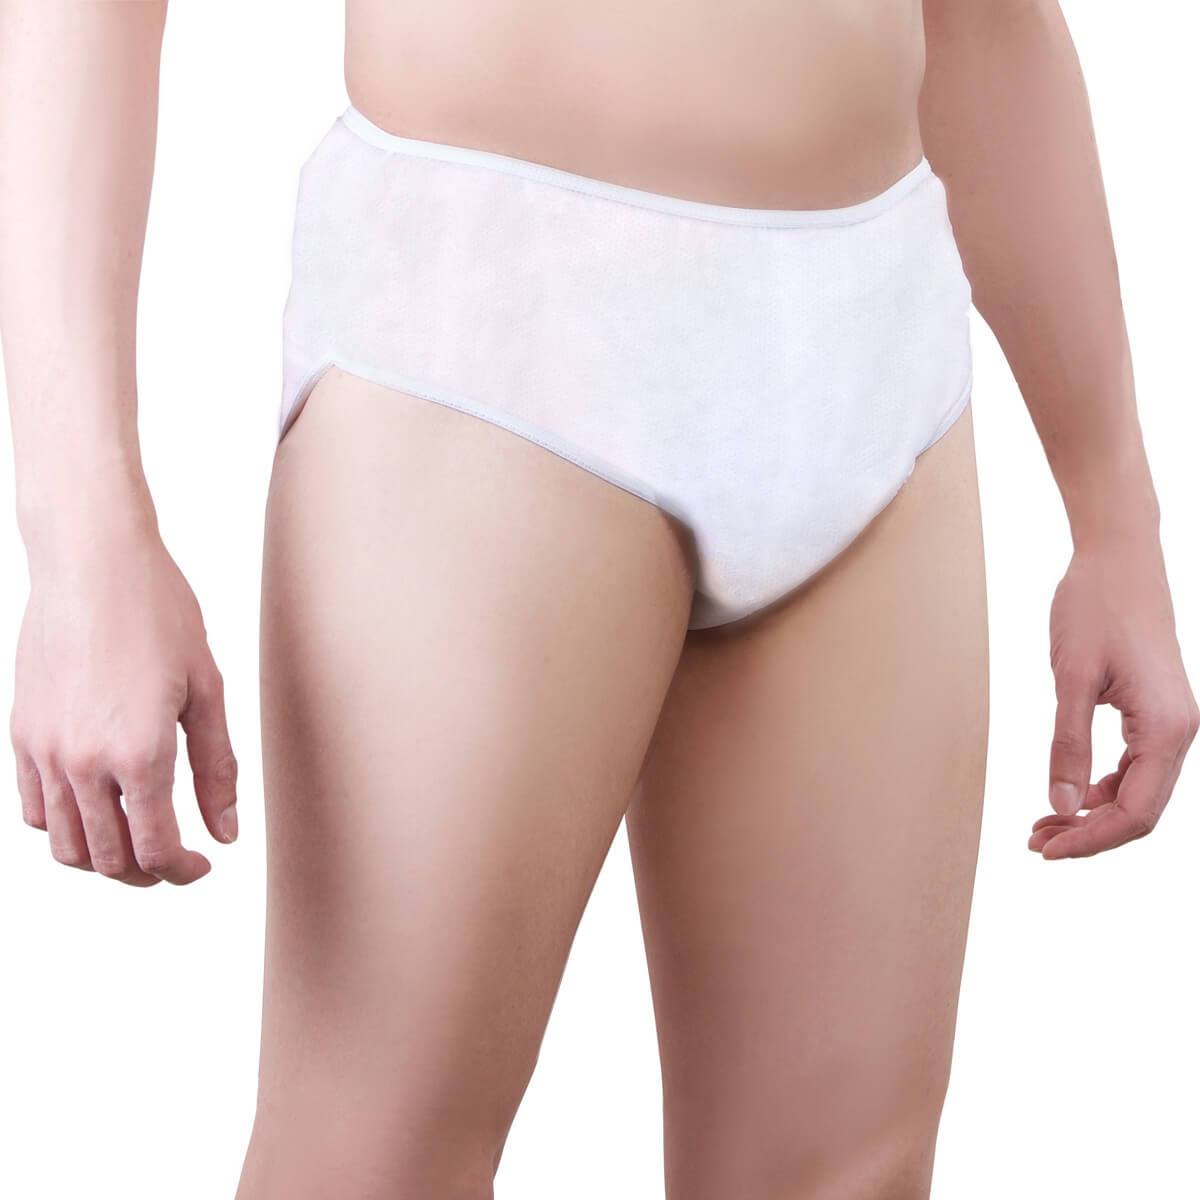 disposable underwear australia